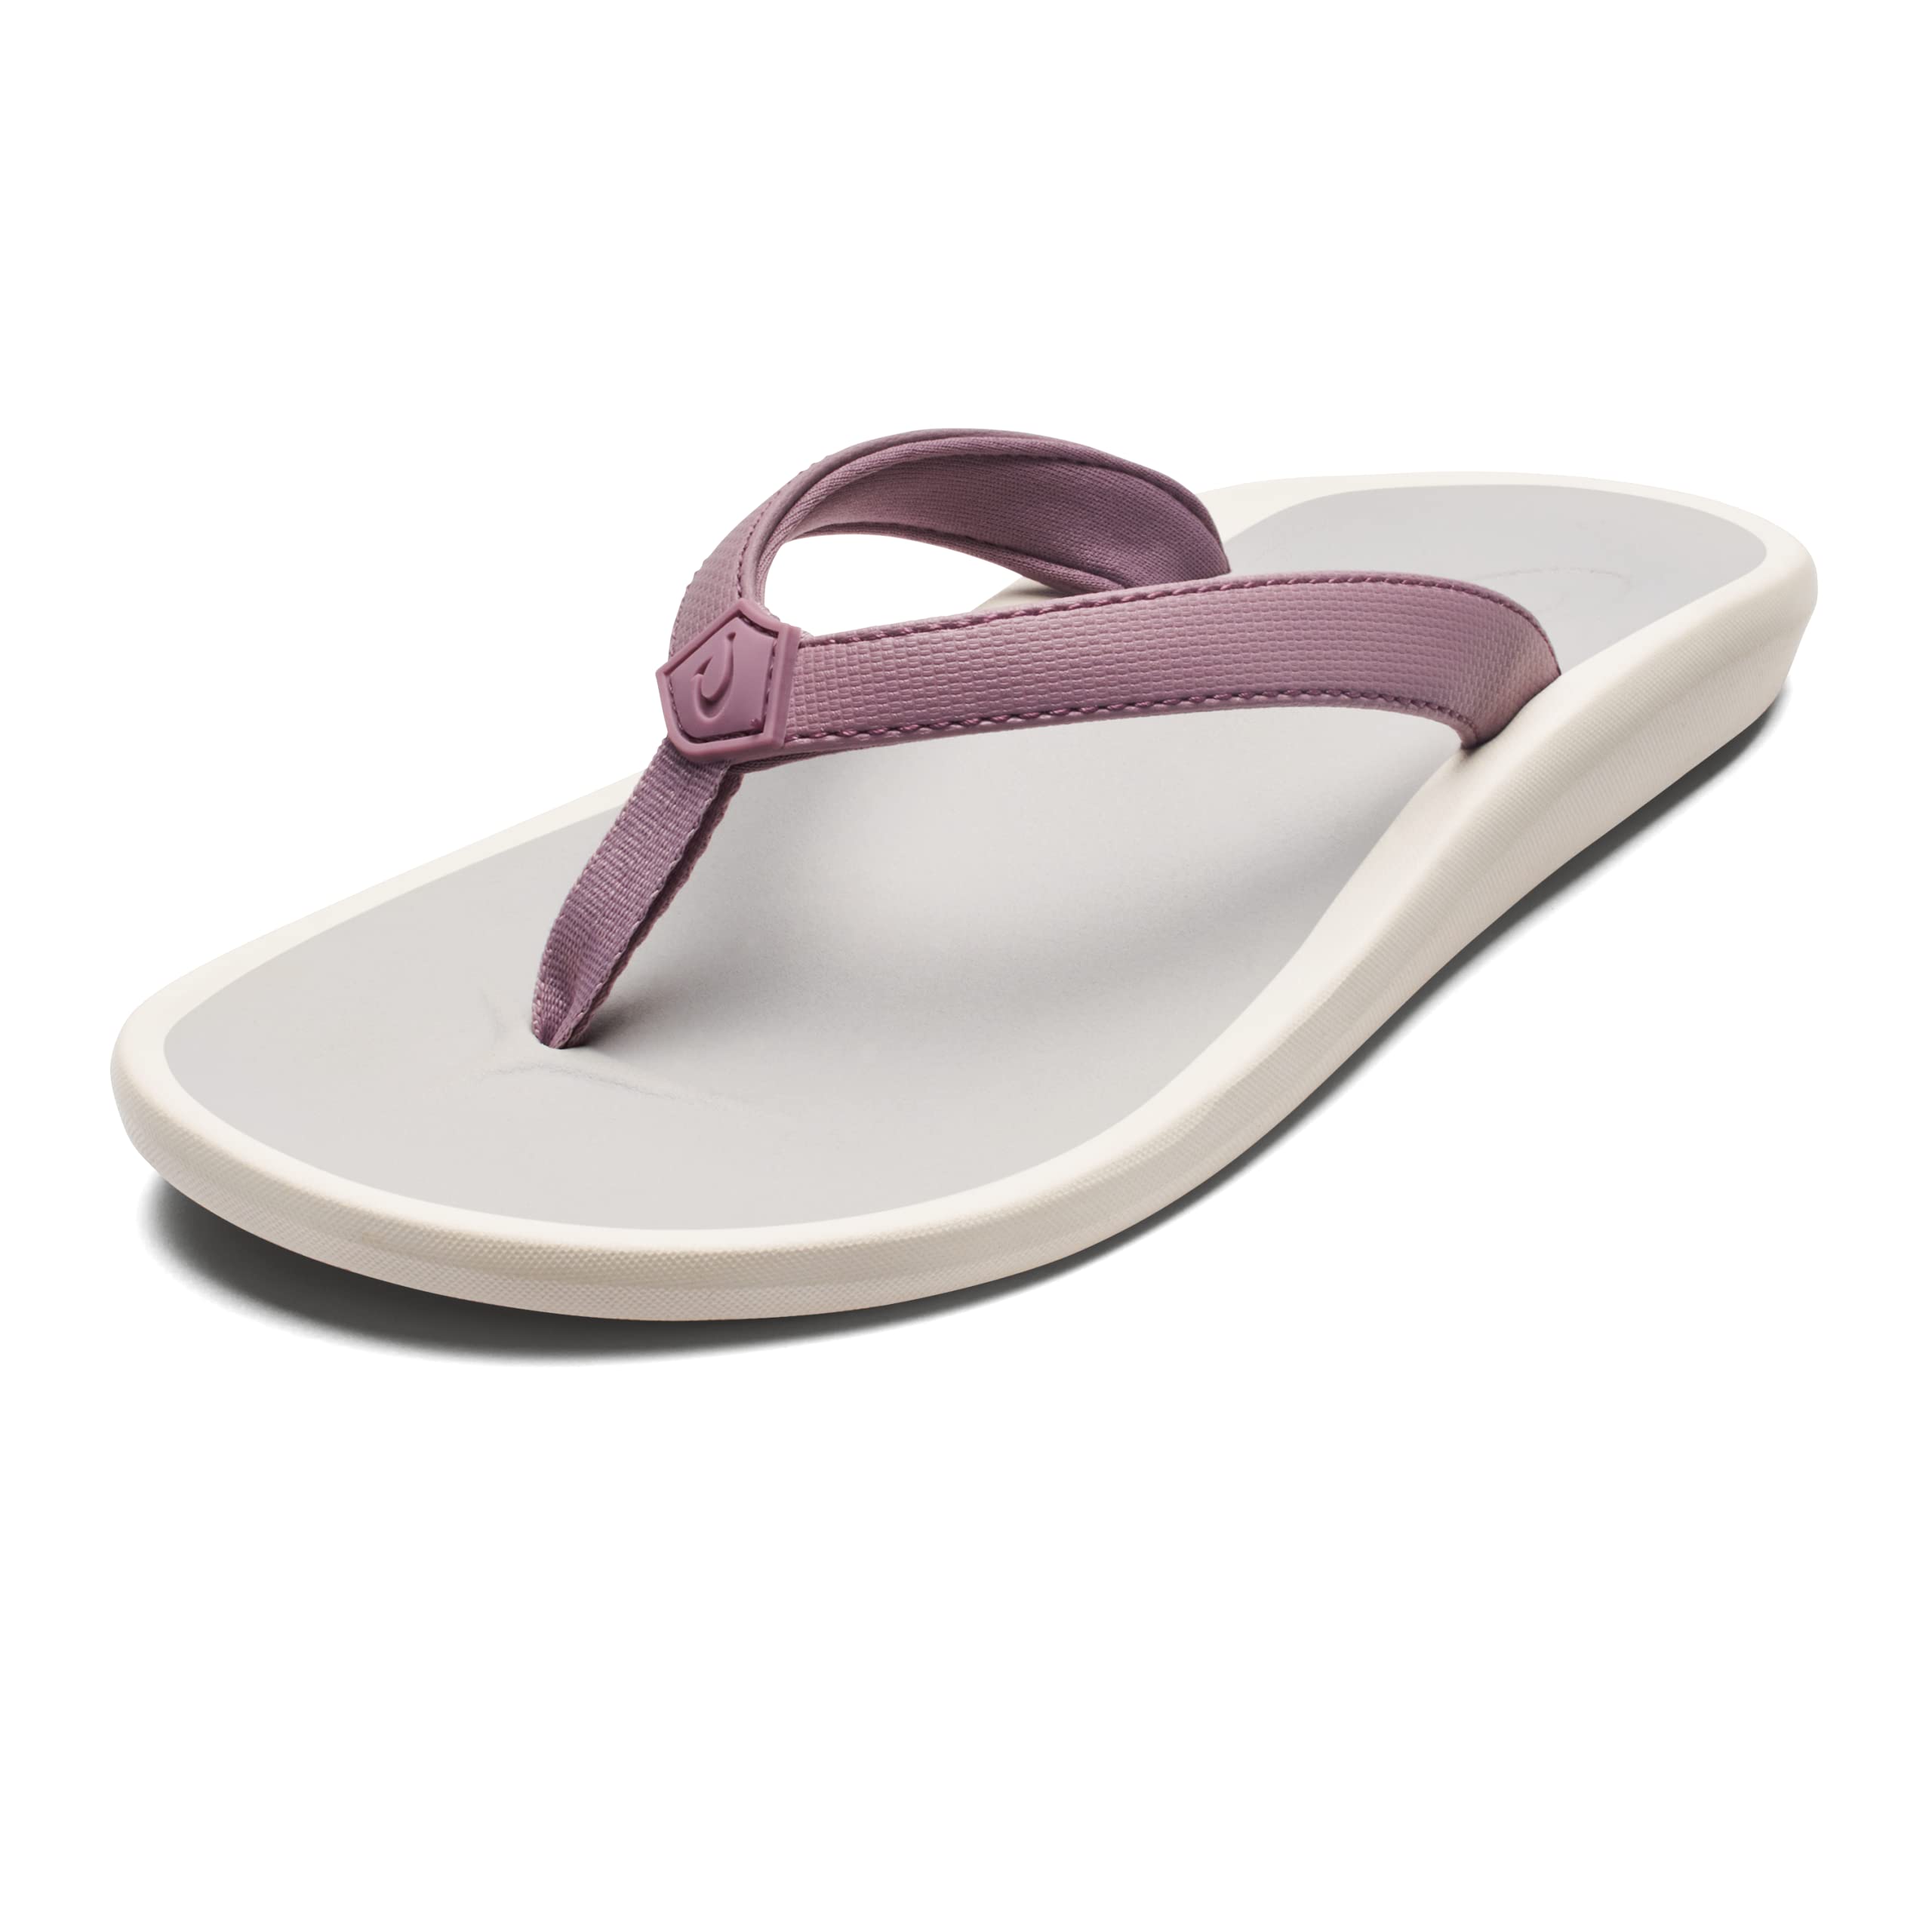 OLUKAI Pi'oe Women's Beach Sandals, Water-Resistant Flip-Flop Slides, Ulta Soft & Comfortable Fit, Wet Grip Soles, Lilac Chalk/Mist Grey, 8